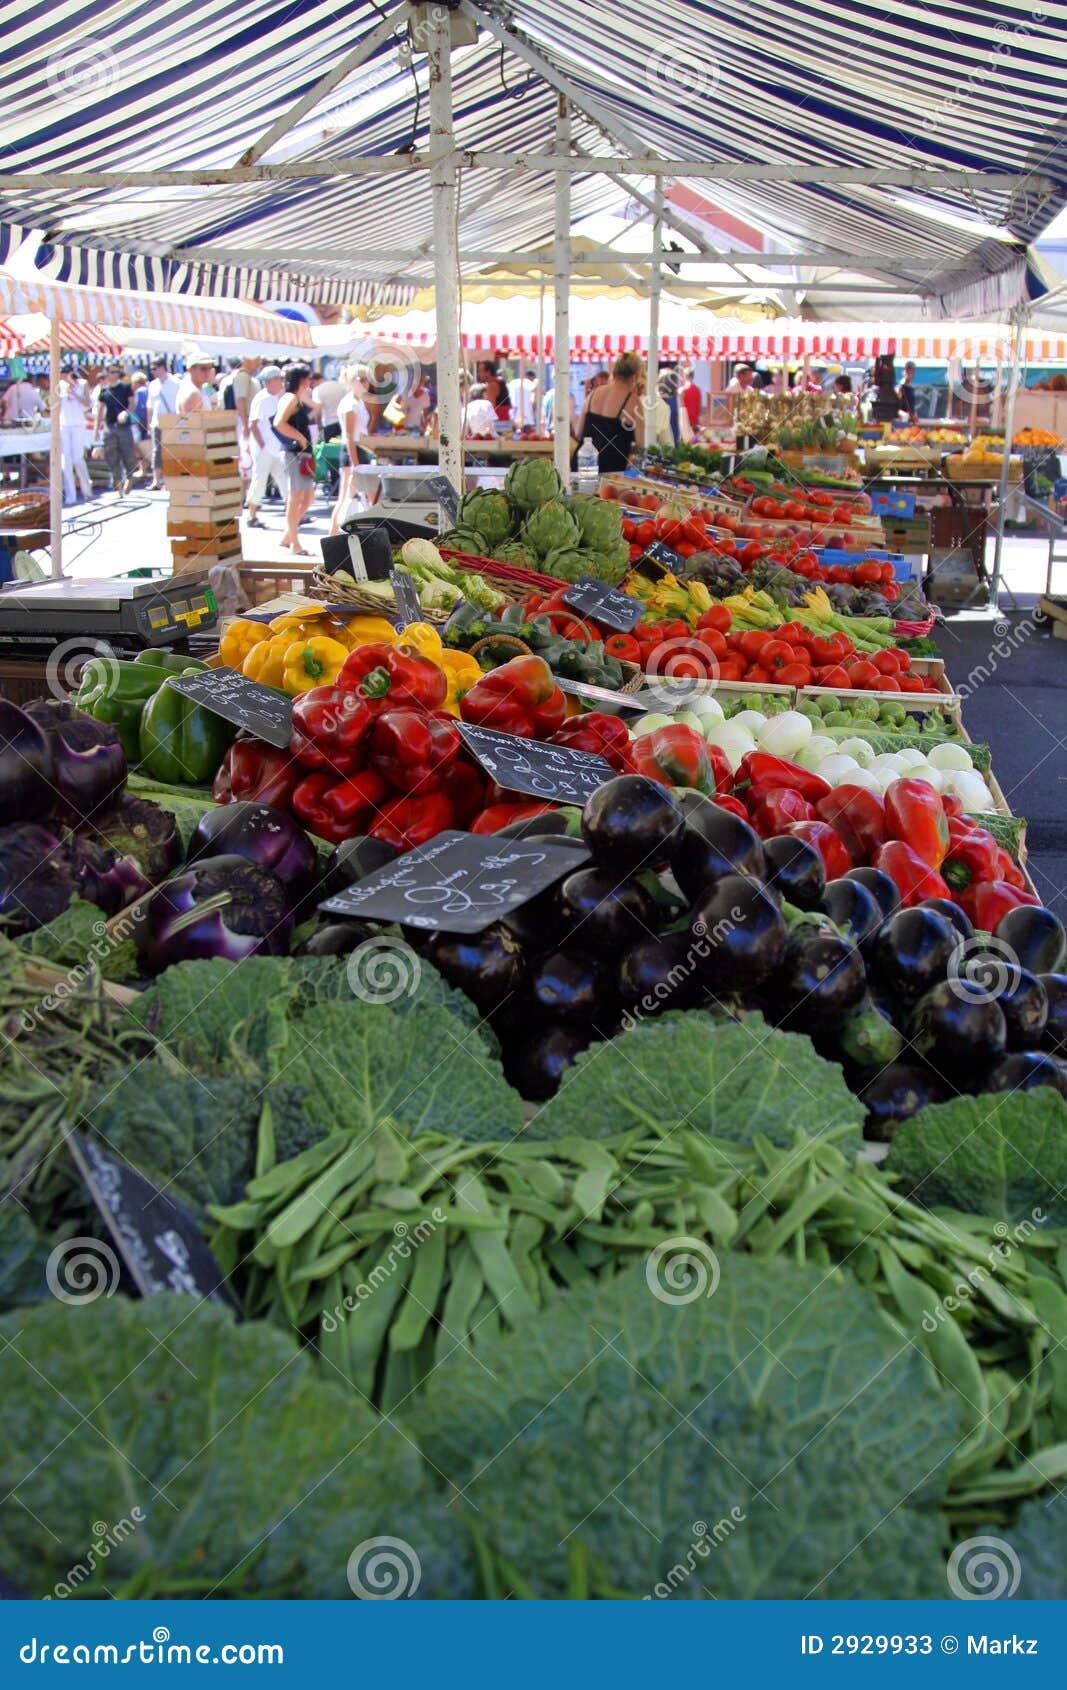 vegetable market stand